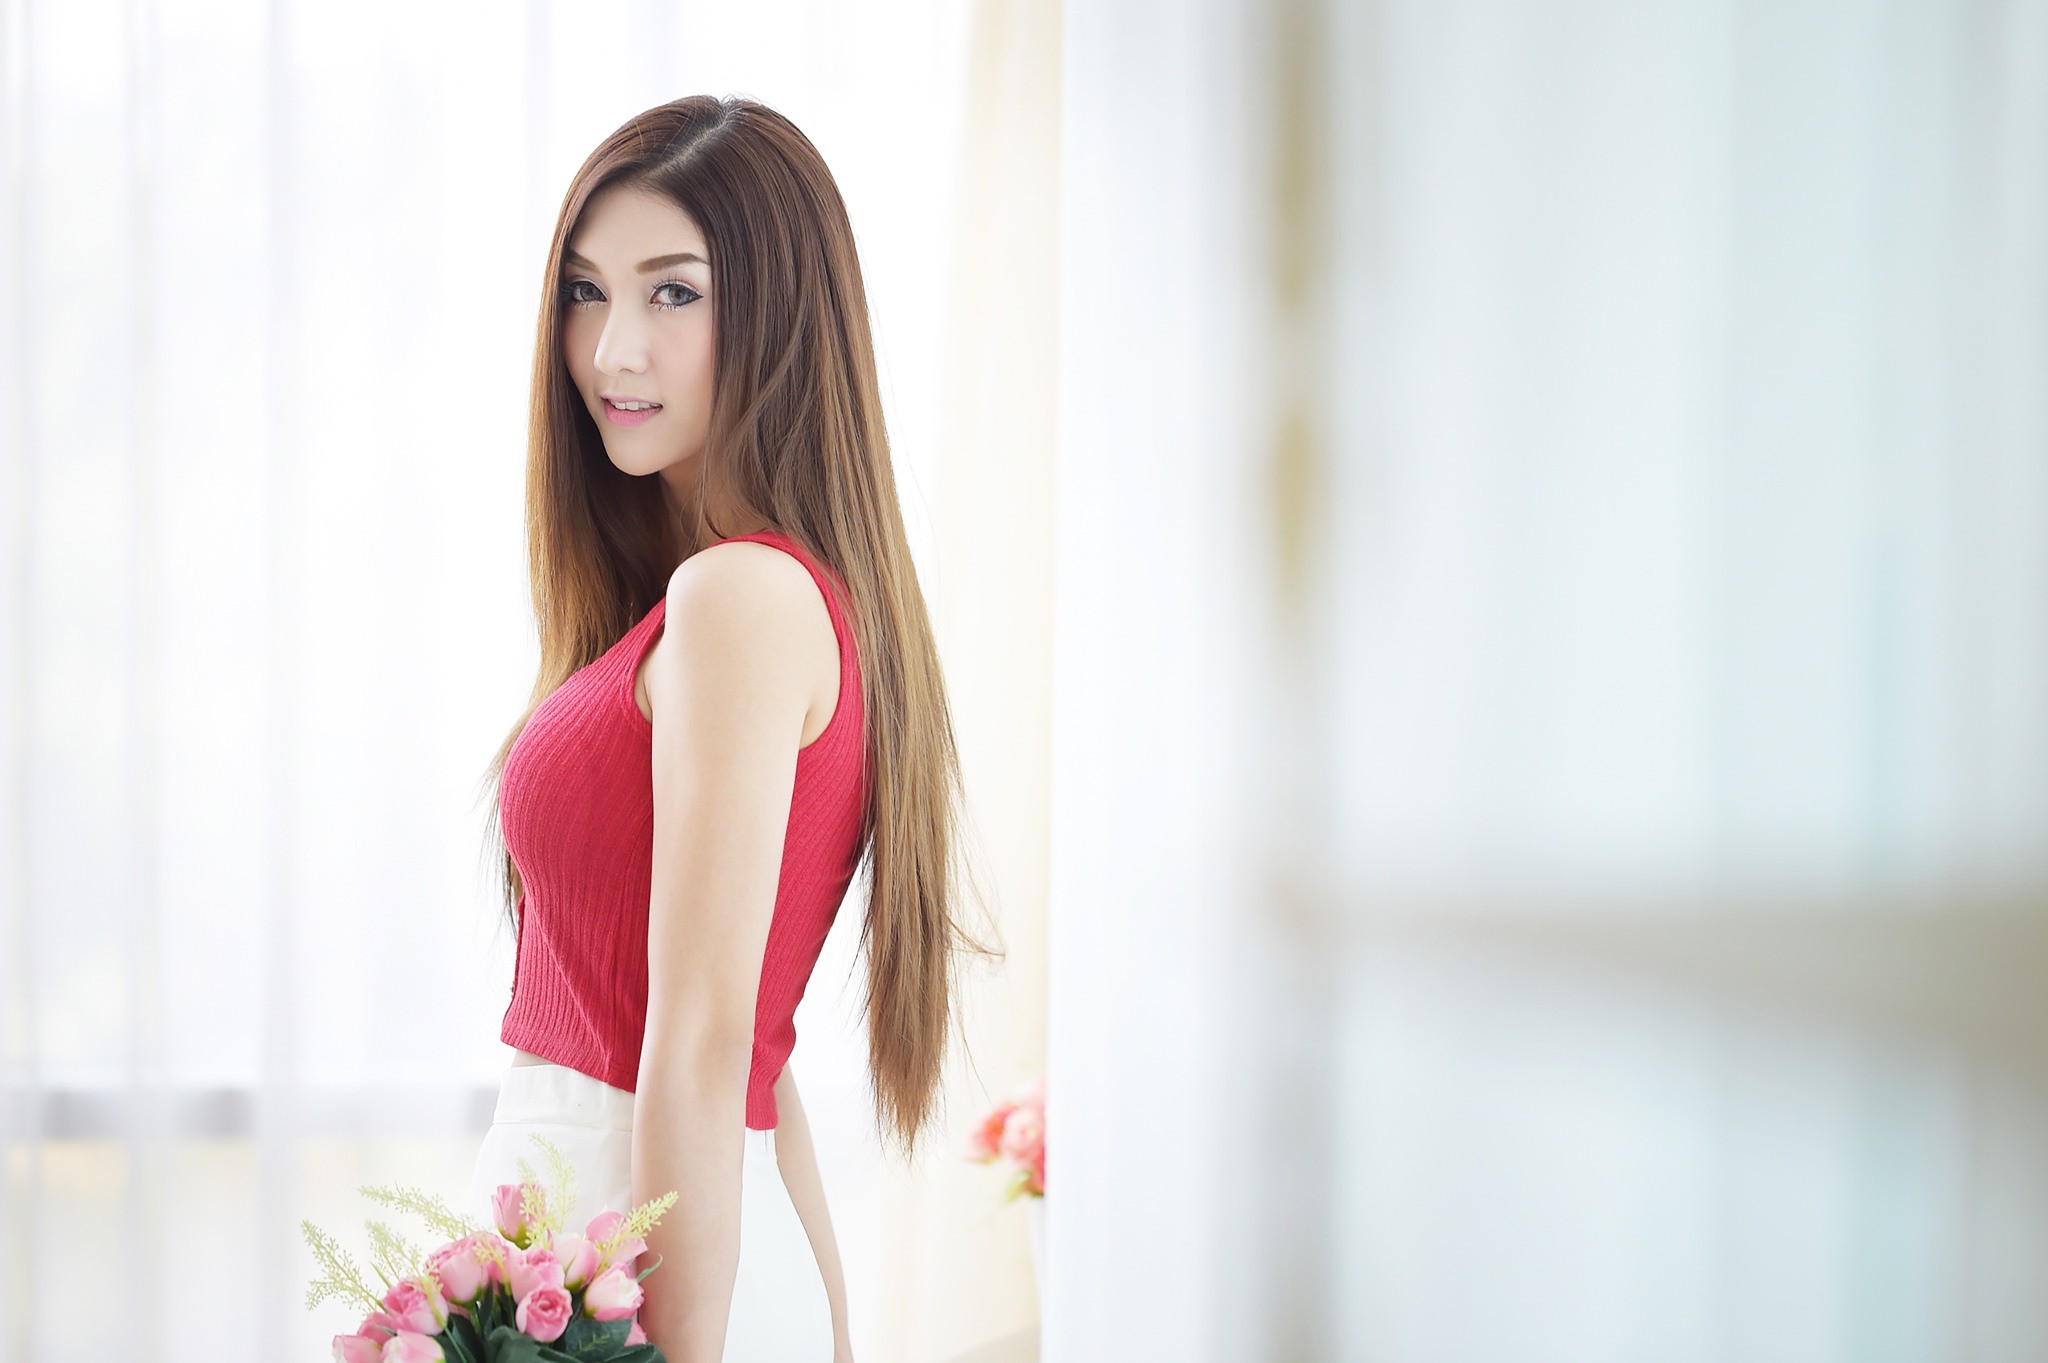 asian women wallpaper,hair,white,pink,clothing,beauty